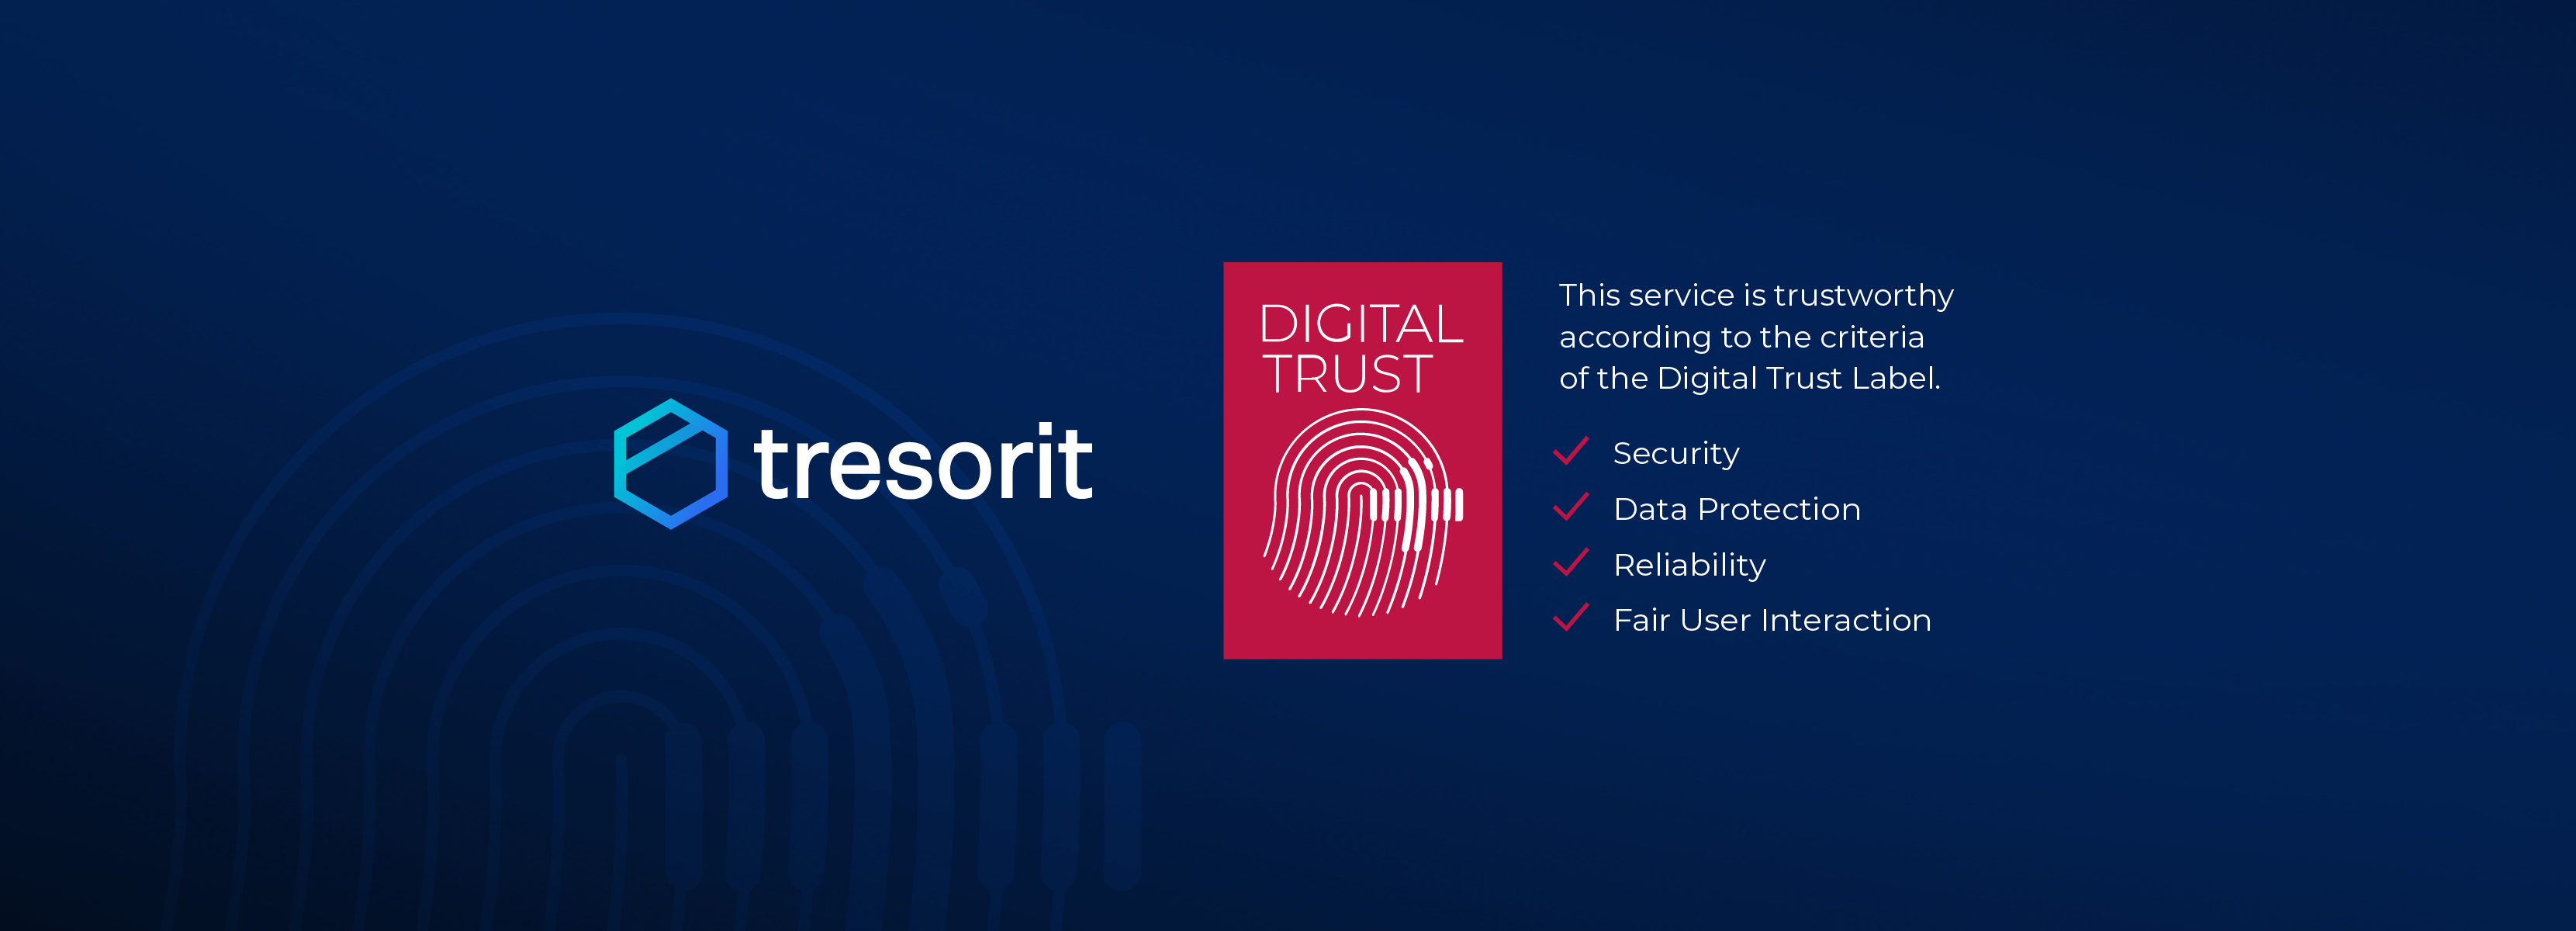 Tresorit has been awarded the Swiss Digital Trust Label